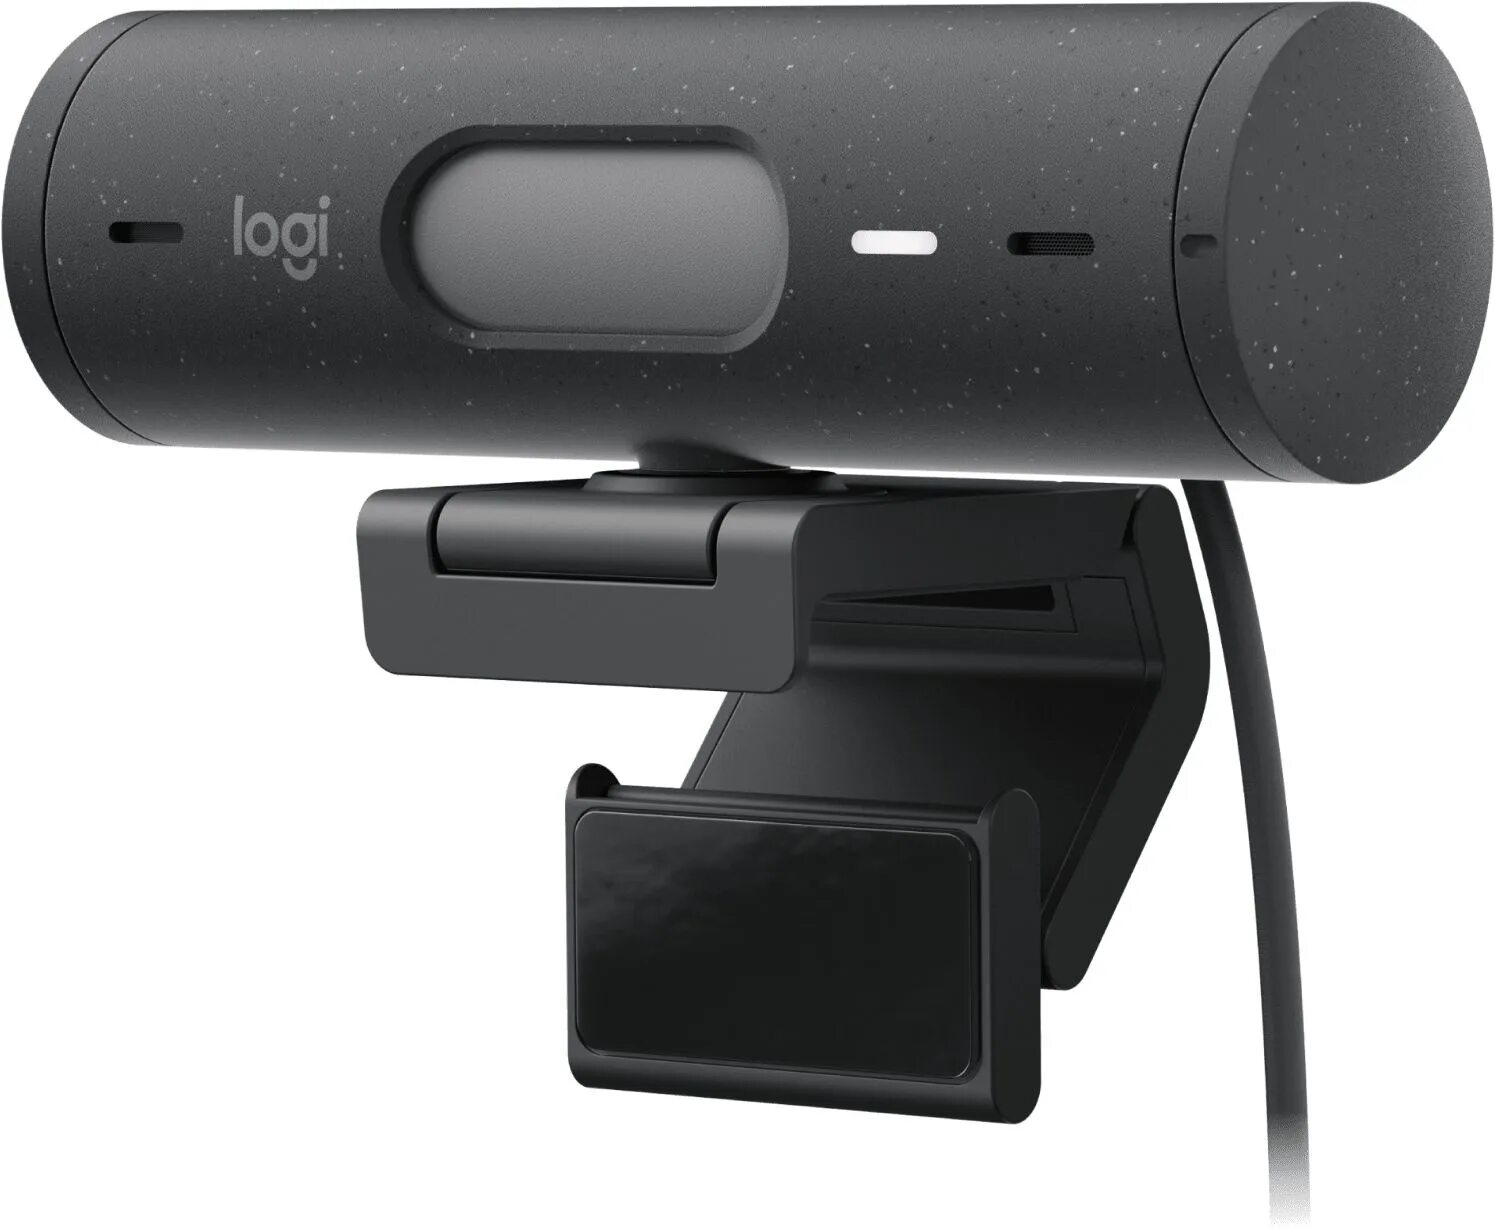 Веб-камера Logitech Brio. Логитеч брио